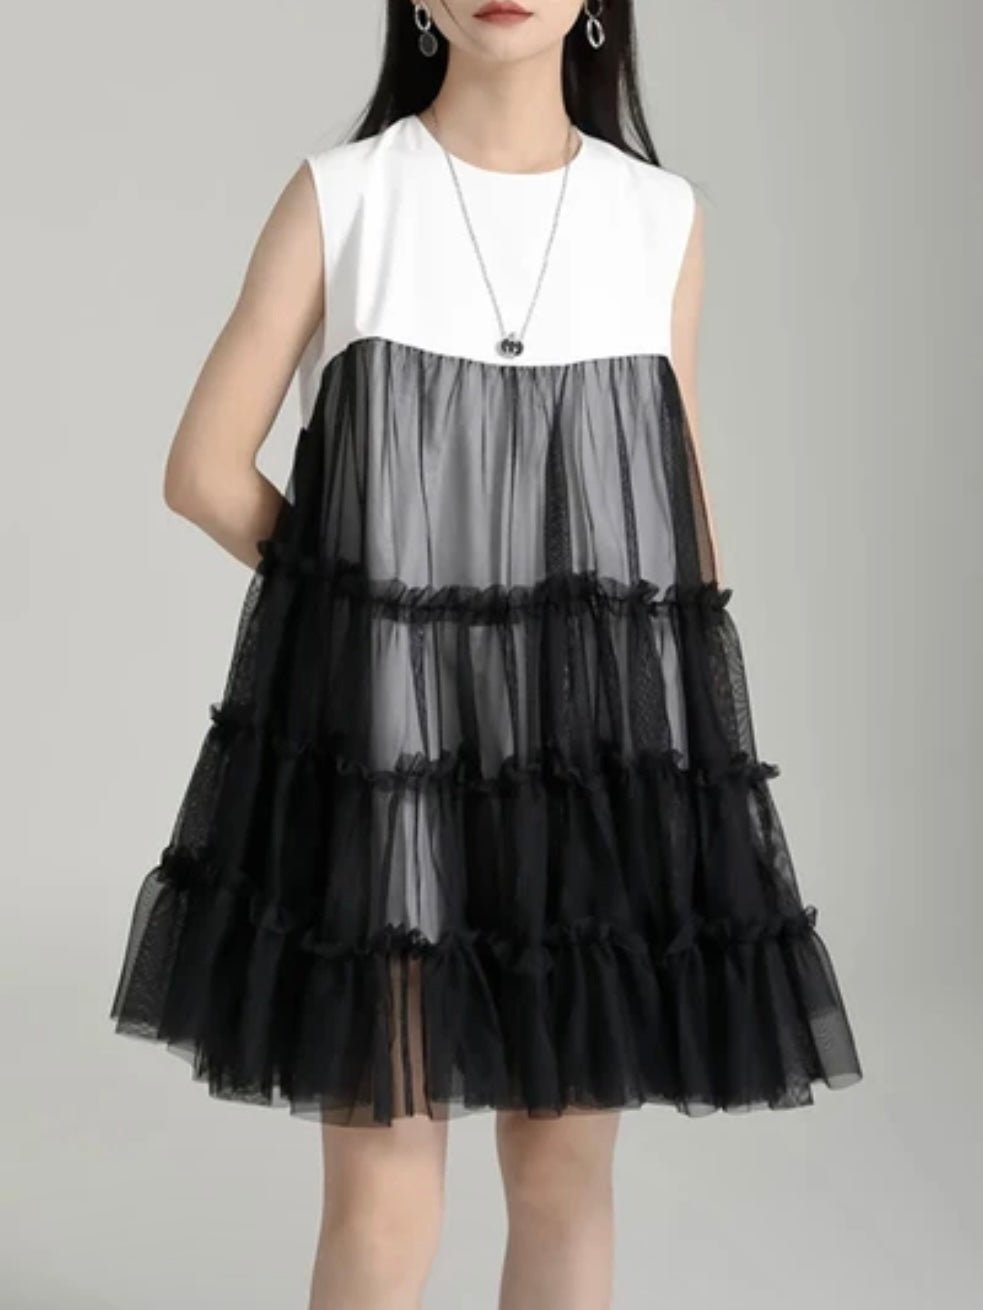 Black and white layered a-line short dress - Wapas